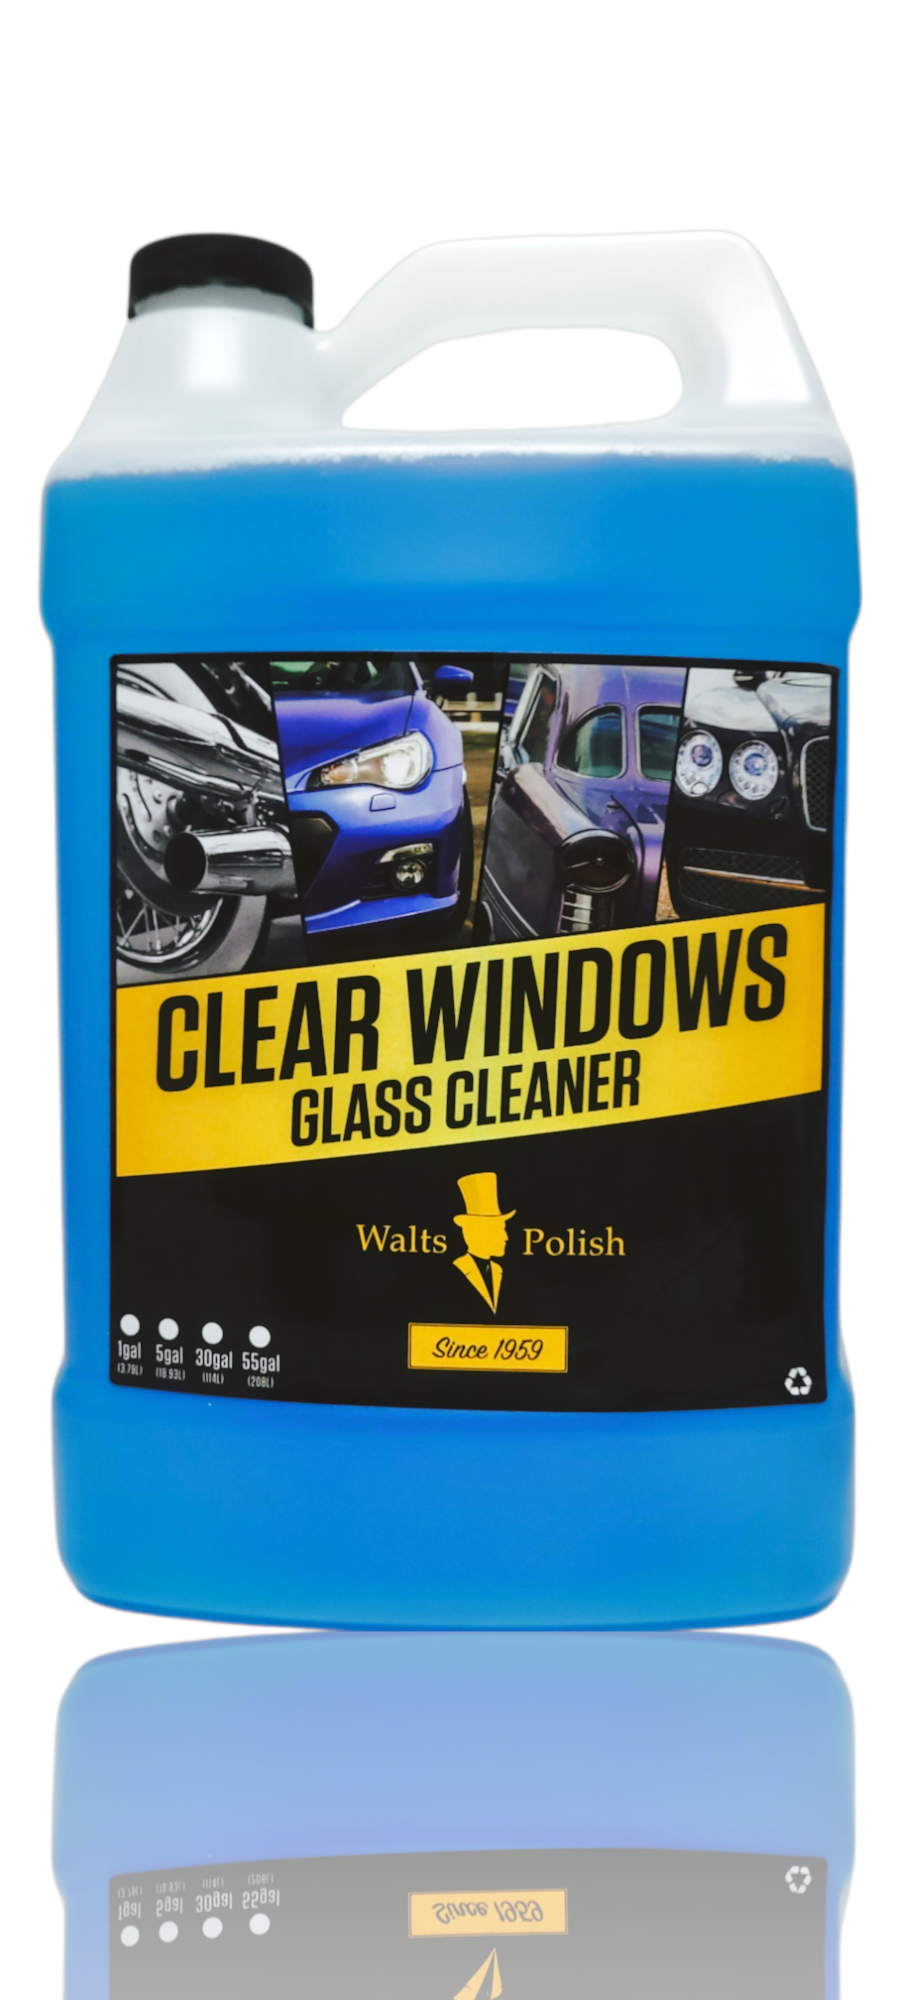 Clear Windows